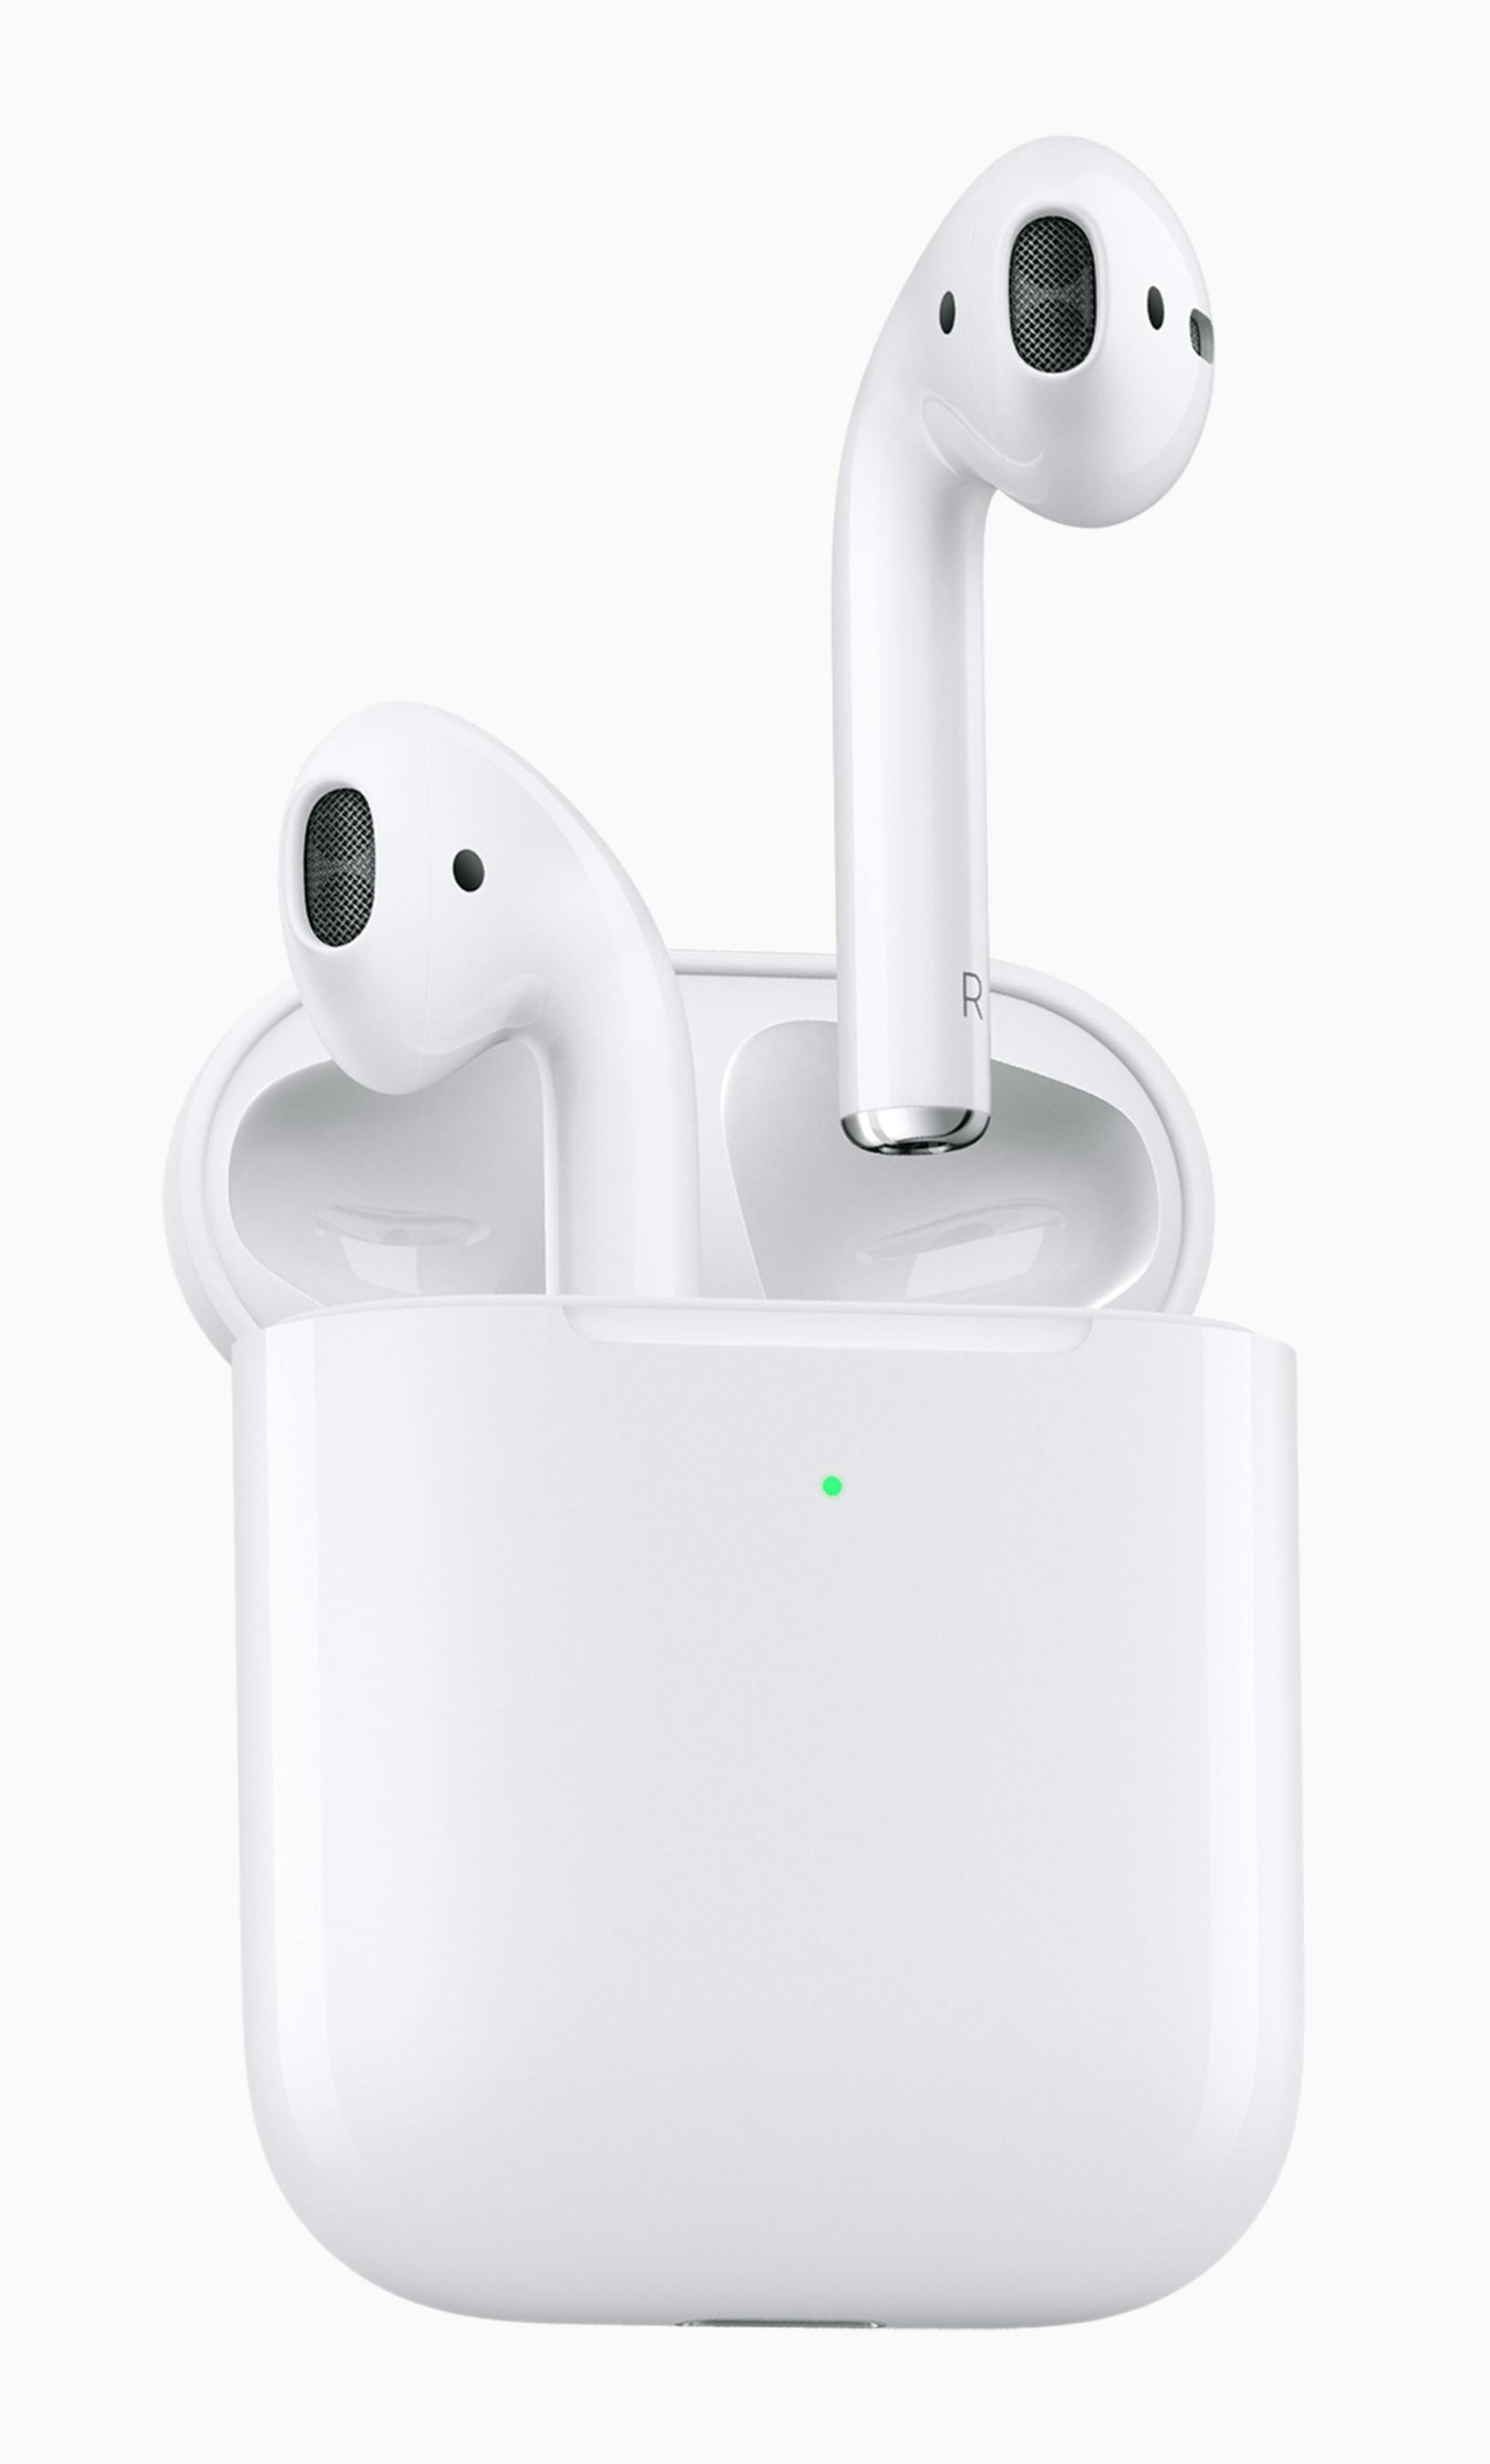 https://imgix.seoghoer.dk/apple-airpods-worlds-most-popular-wireless-headphones_03202019.jpg